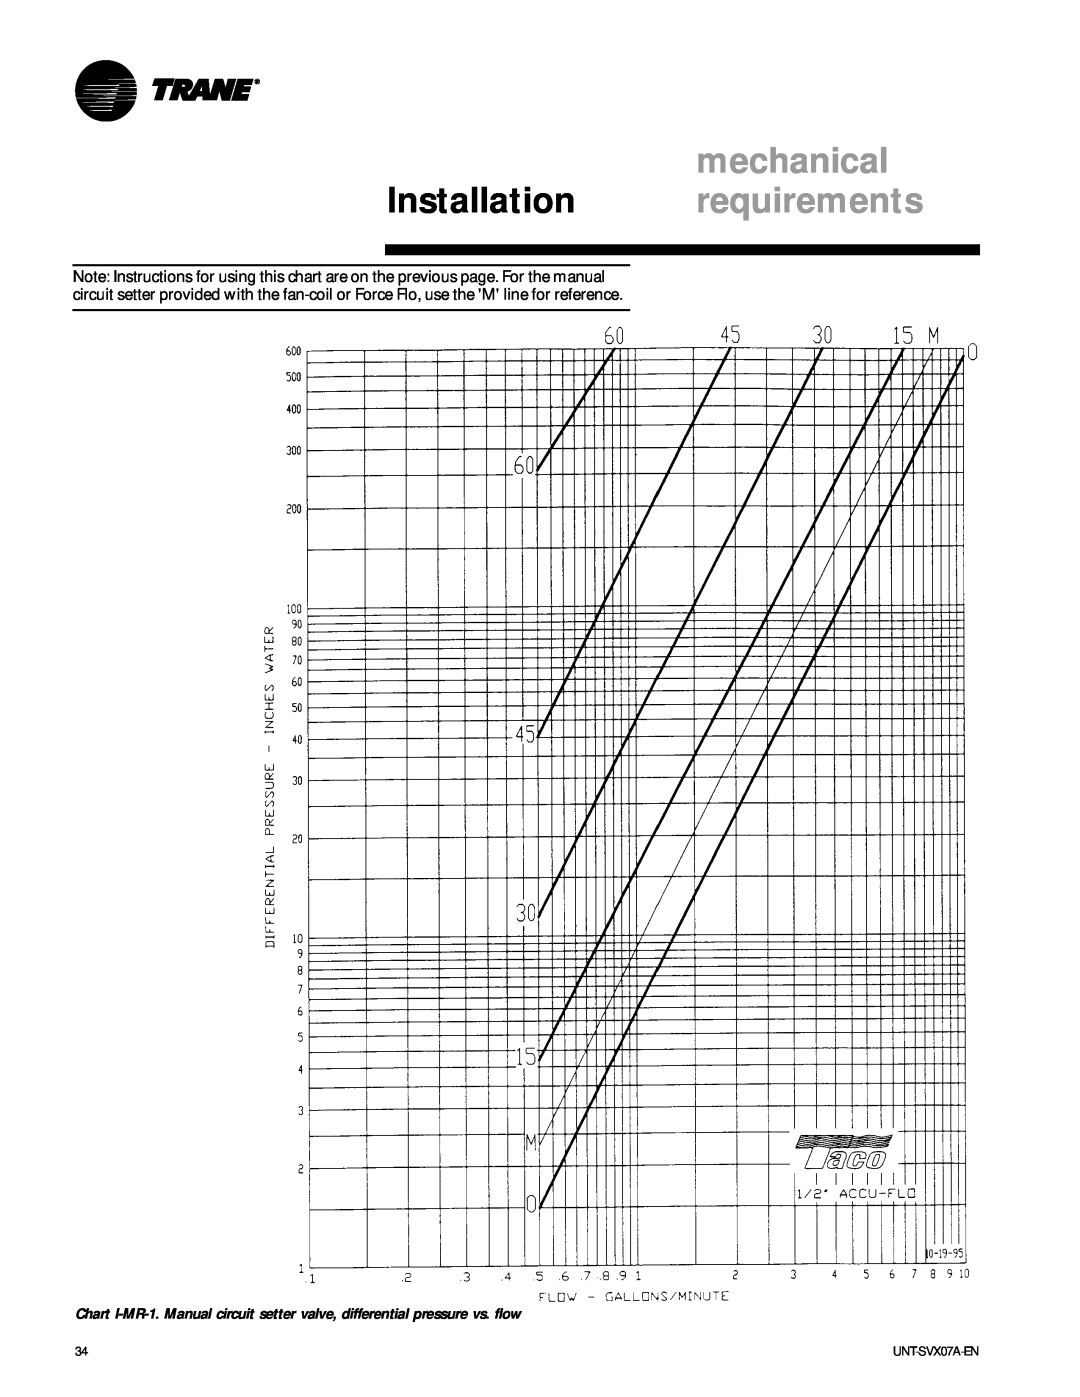 Trane UNT-SVX07A-EN, UniTrane Fan-Coil & Force Flo Air Conditioners manual mechanical, Installation requirements 